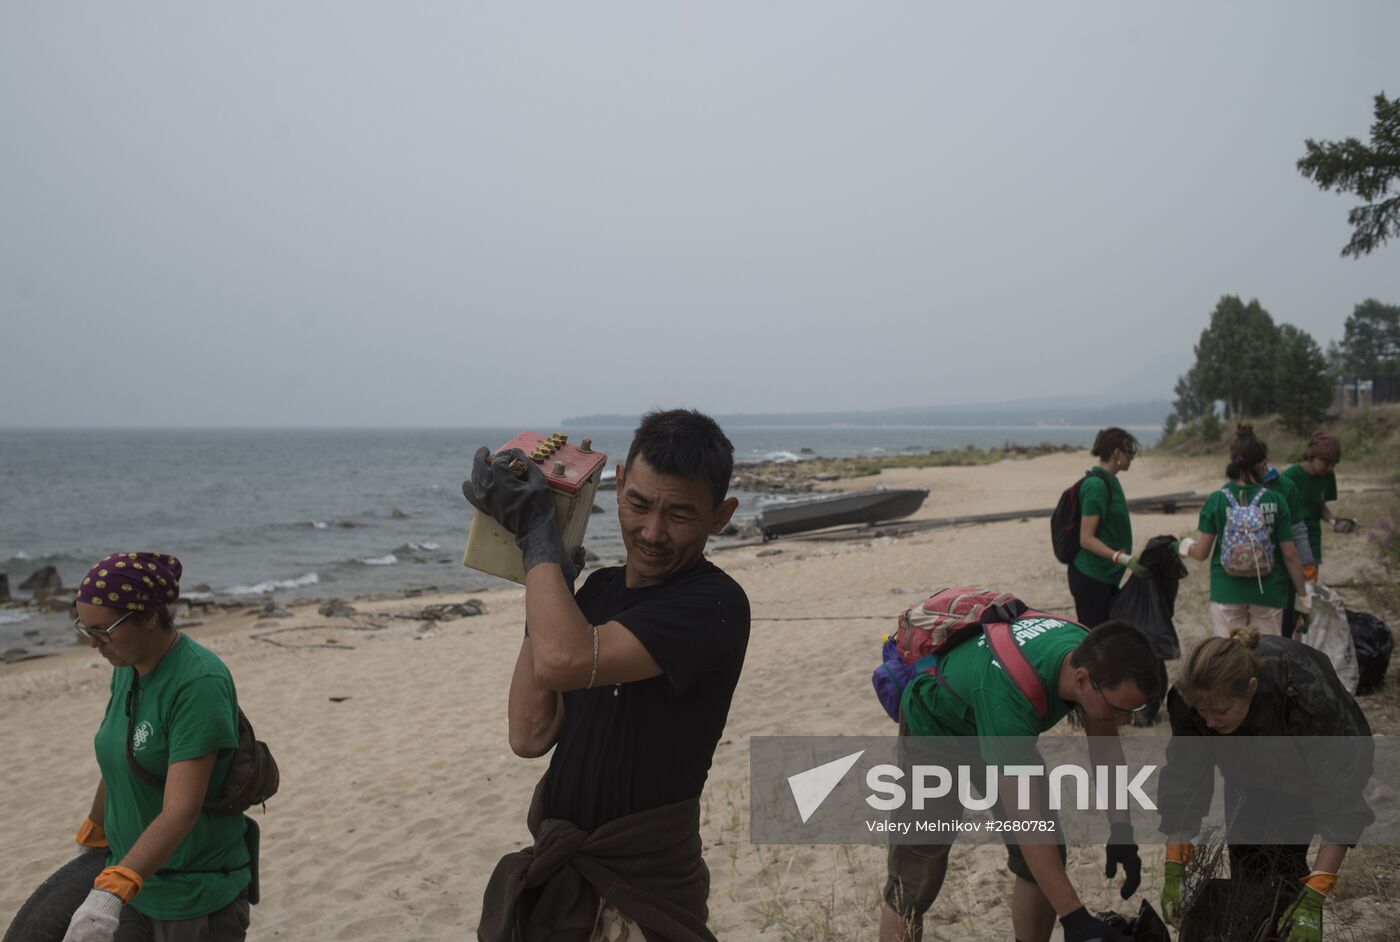 Baikal volunteer shore service